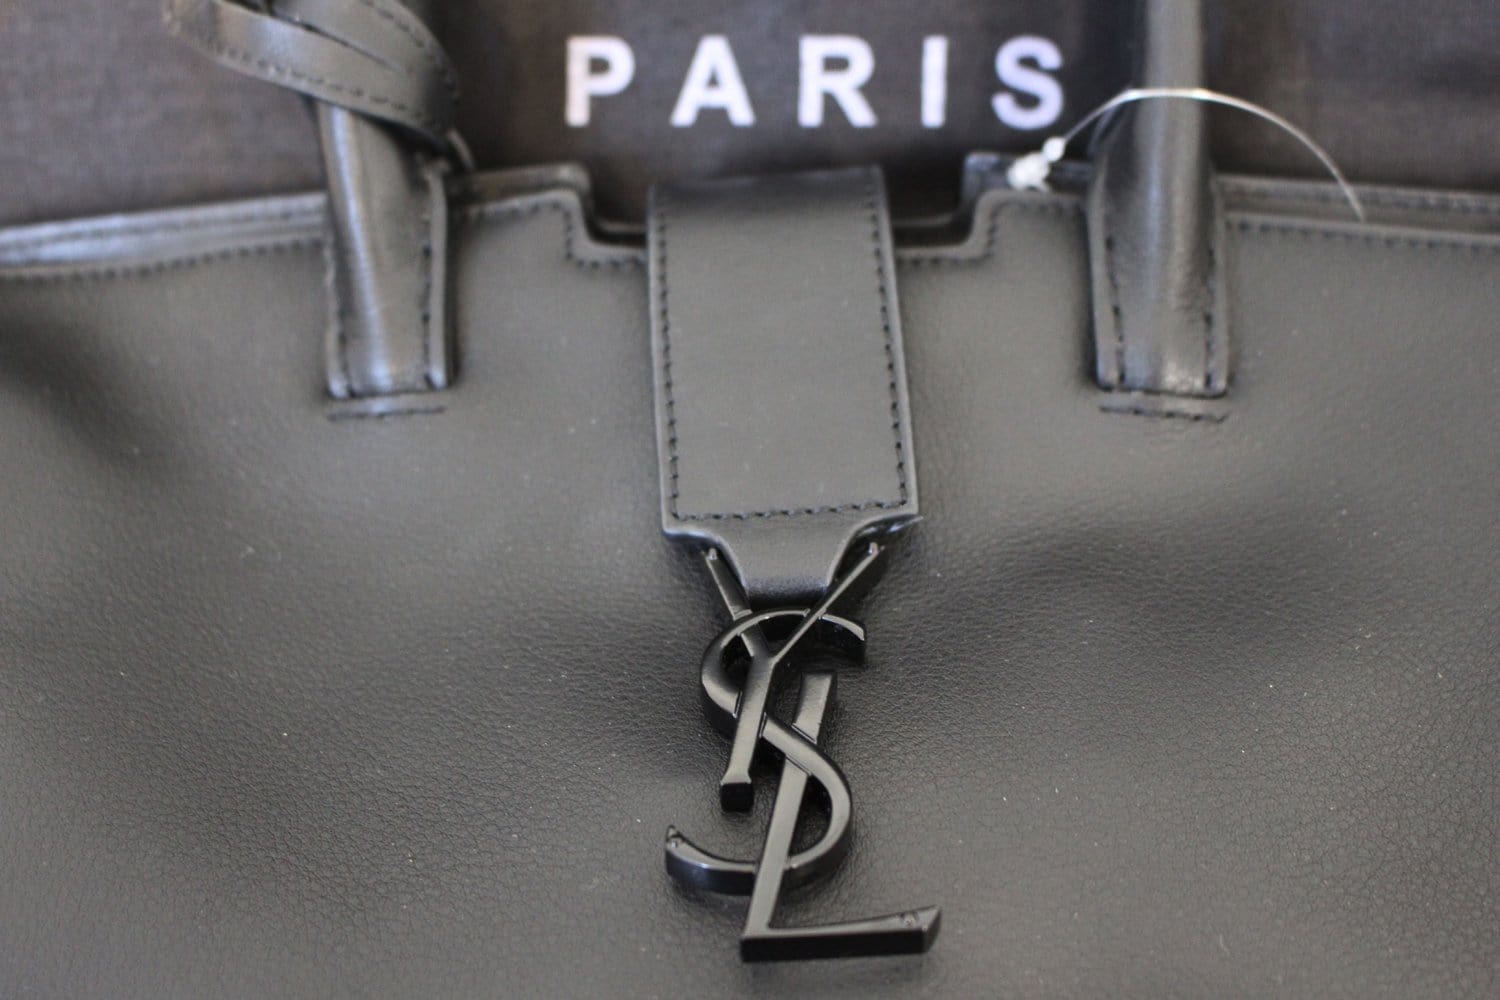 YSL Saint Laurent Black Cabas Monogram Bag Authentic Crossbody Handle